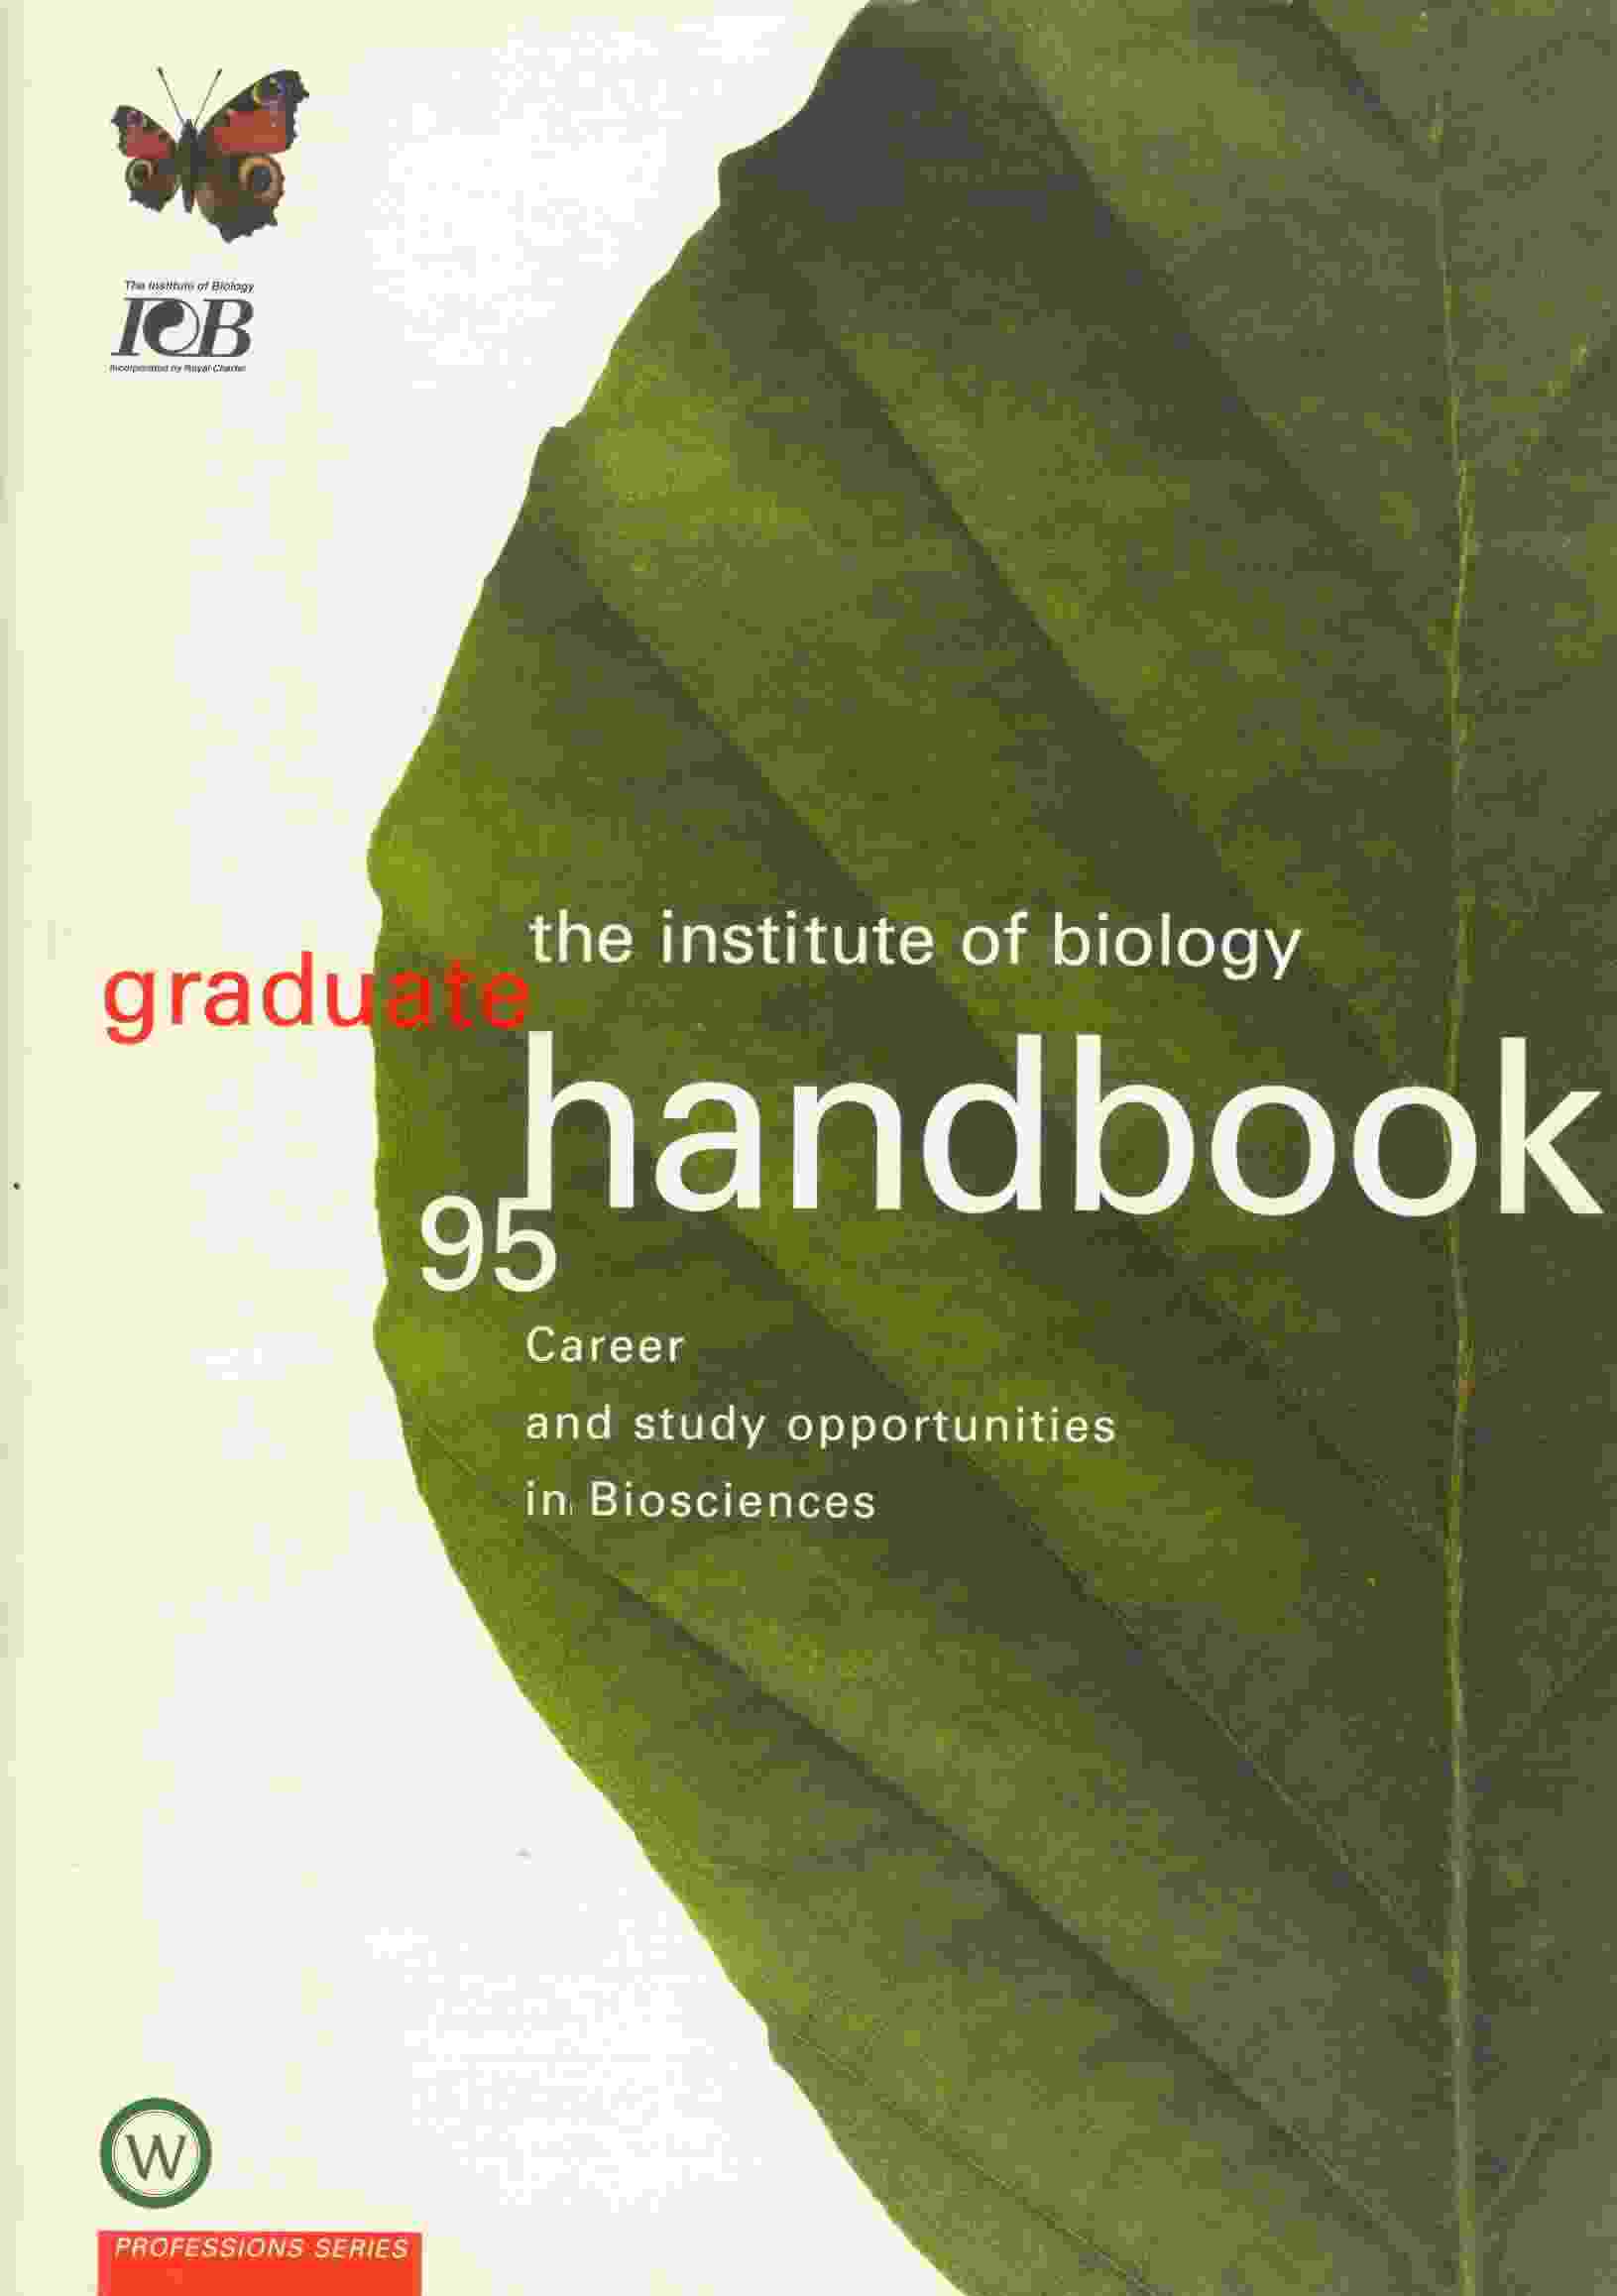 Postgraduate biology